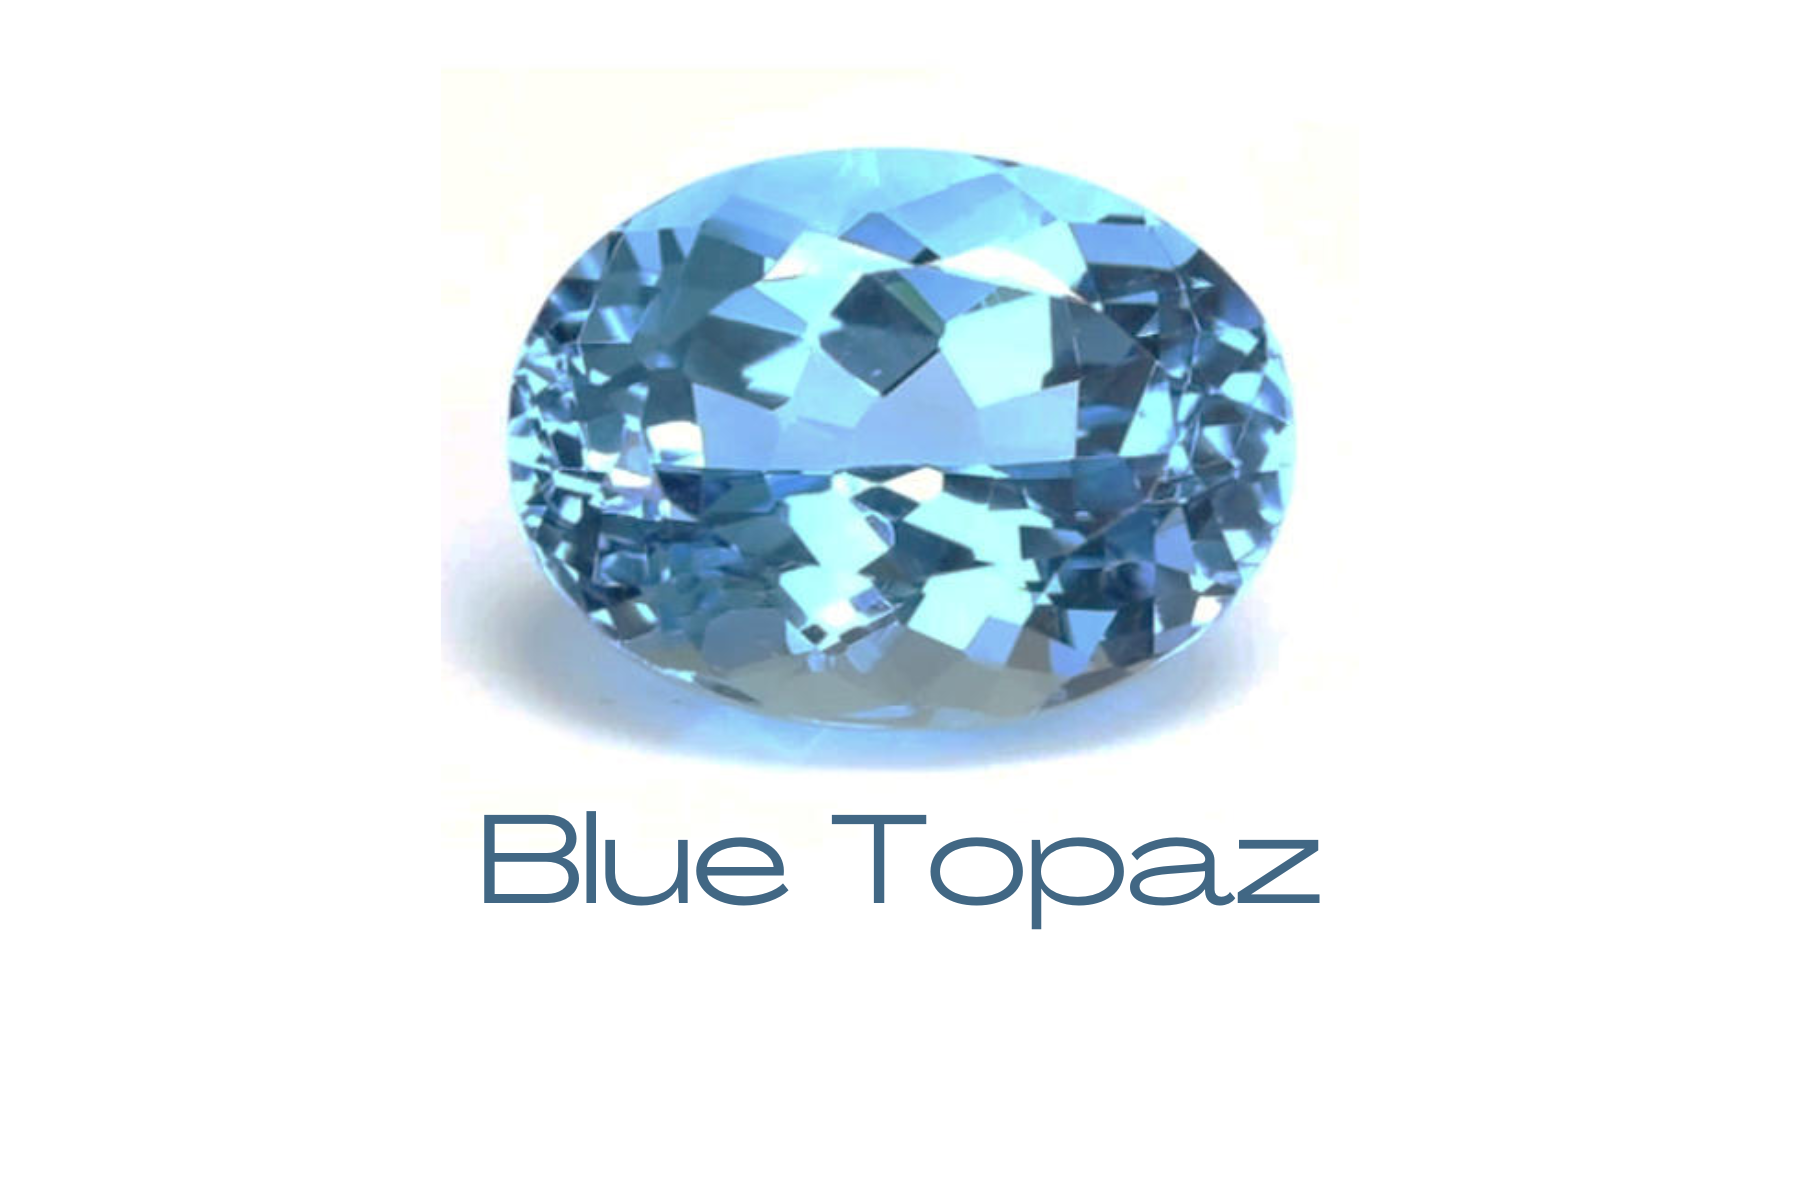 Oblong blue topaz gemstone